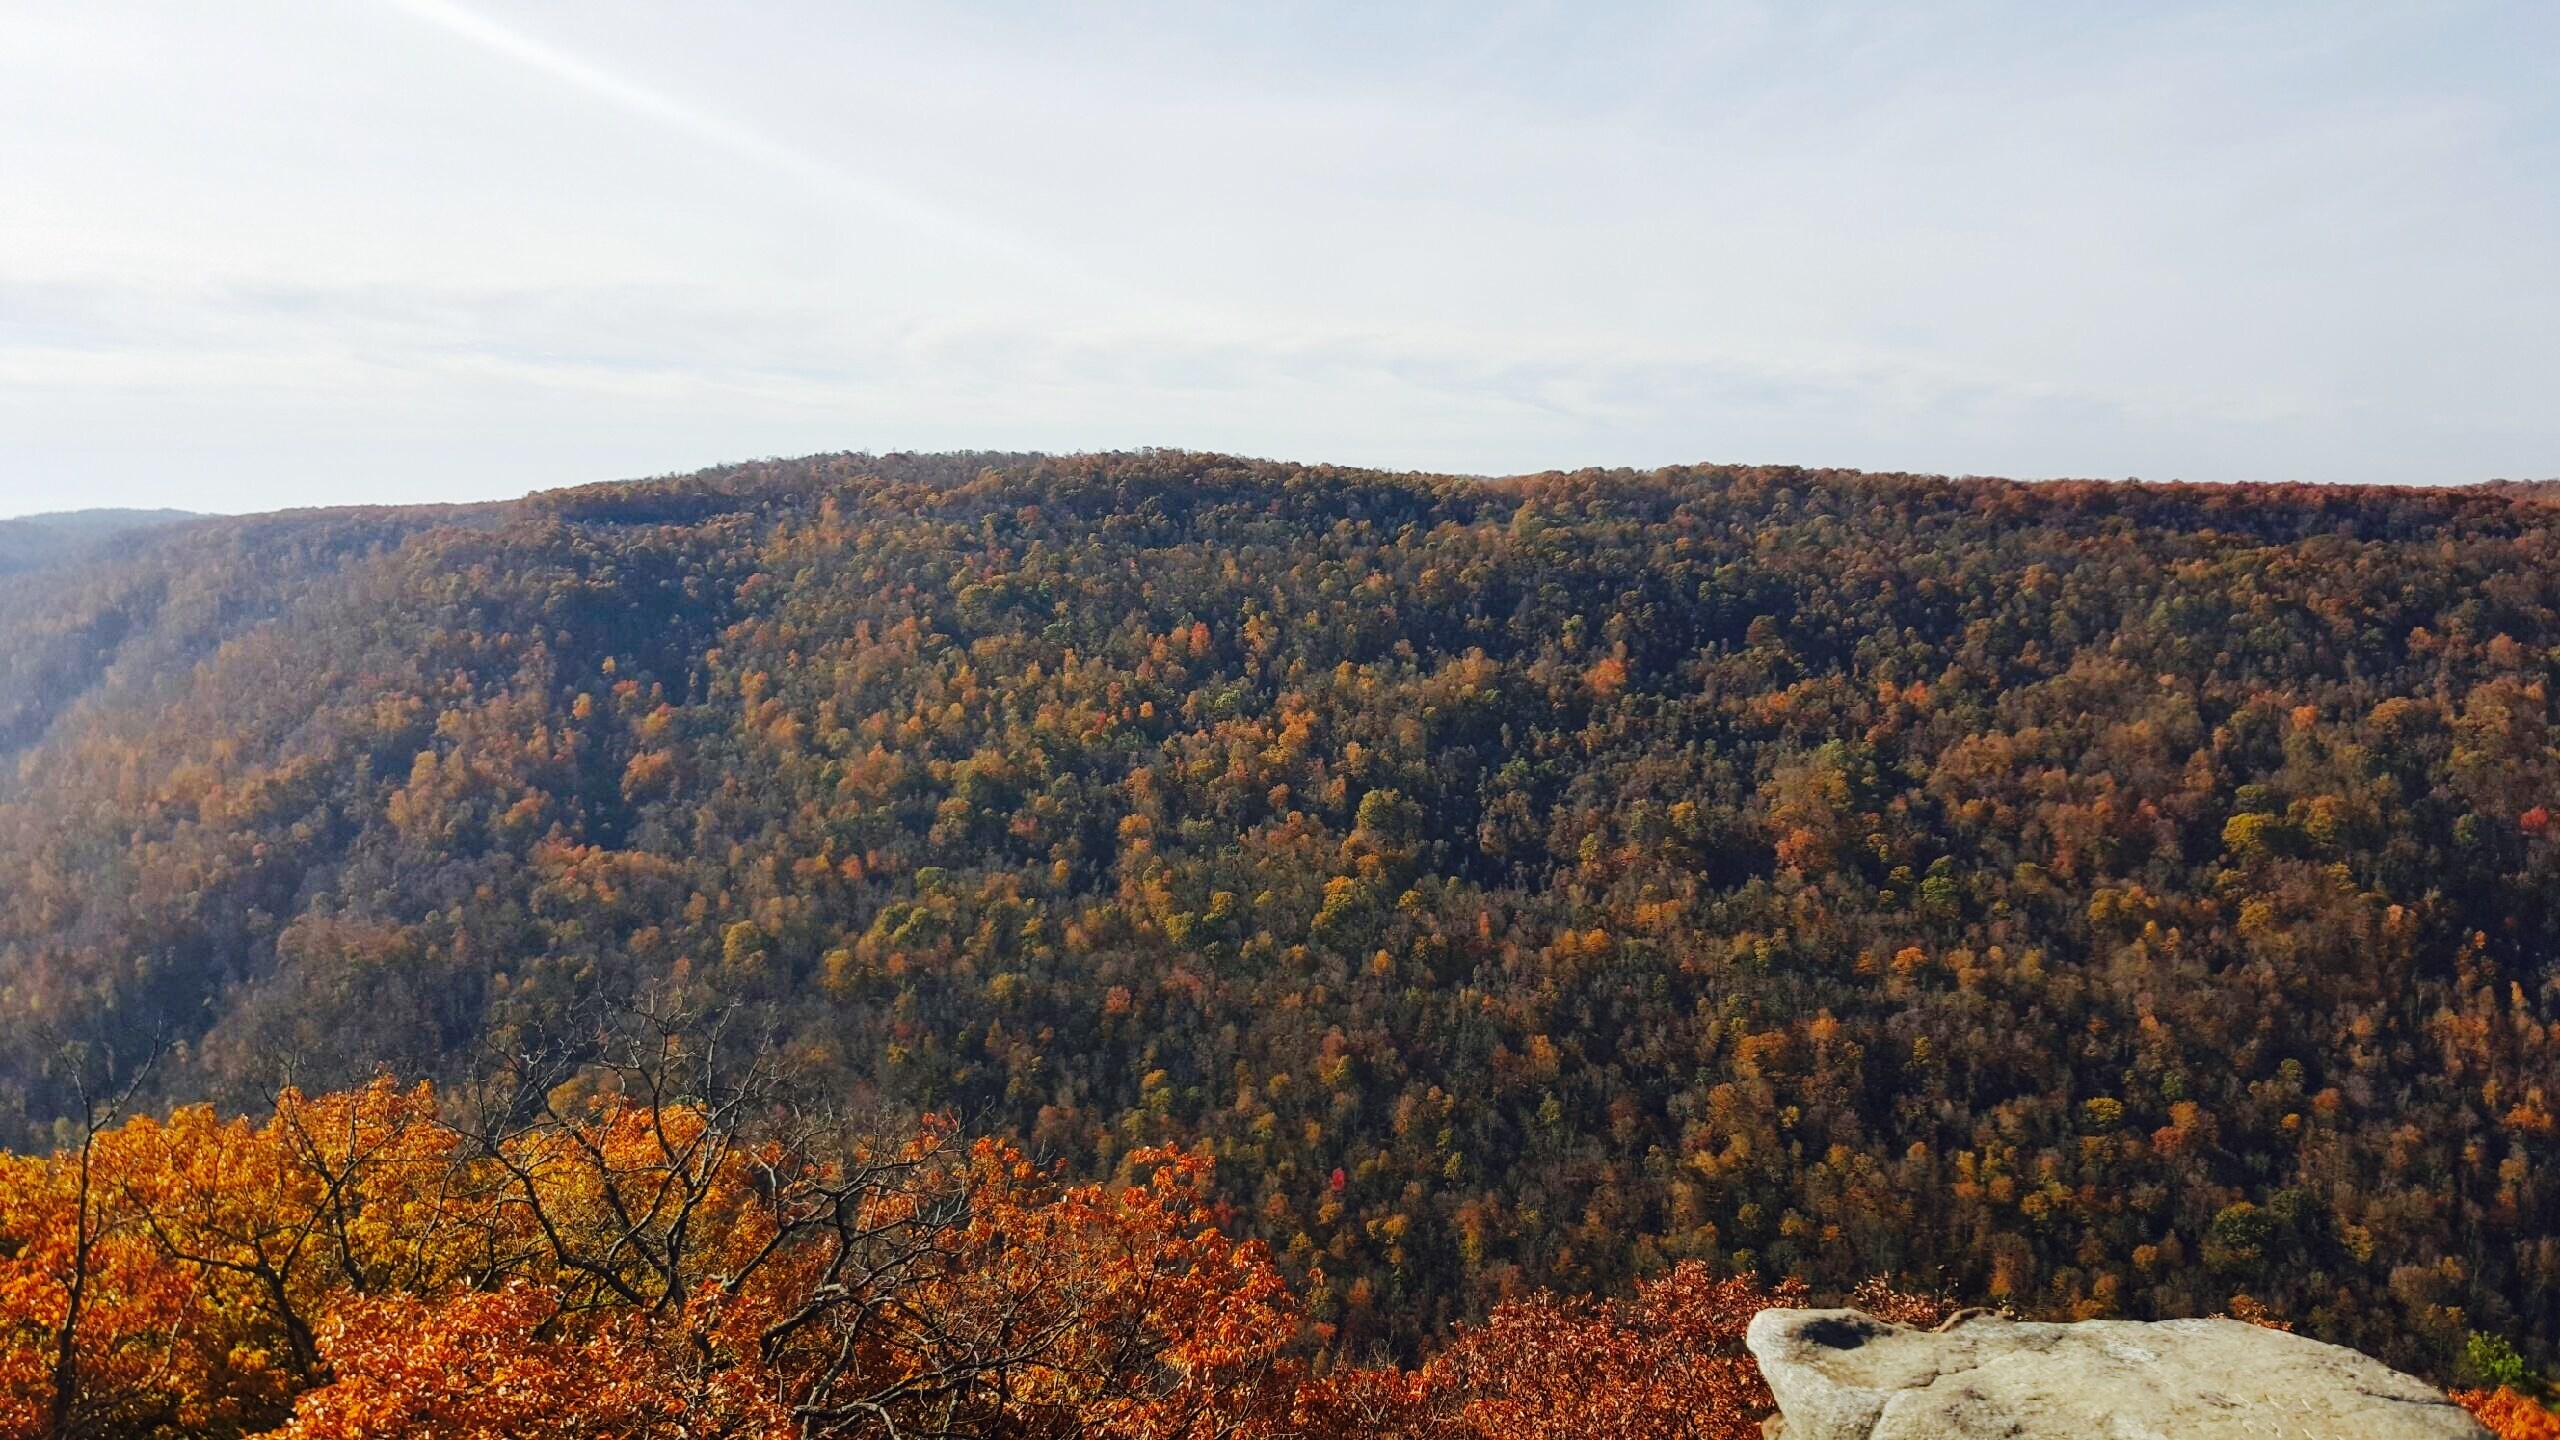 2560x1440 Fall foliage season winds down in West Virginia - WVU Football, WVU  Basketball, News - Mountaineer Sports